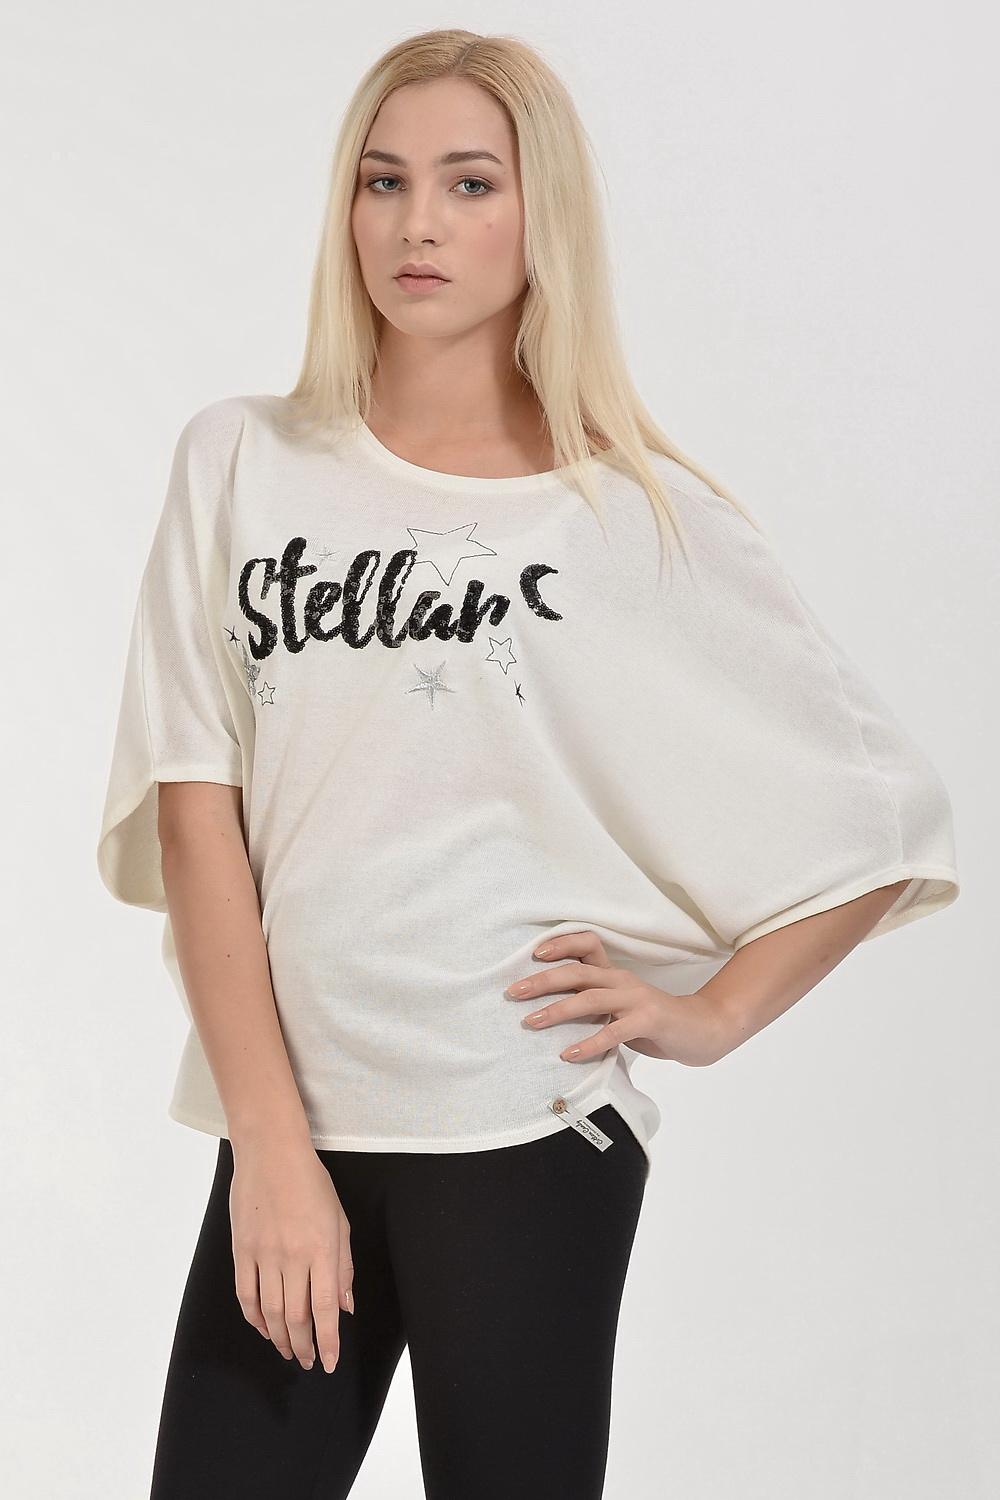 Cotton Candy Stellar Pul İşlemeli Yarasa Kol Kadın T-Shirt - Krem